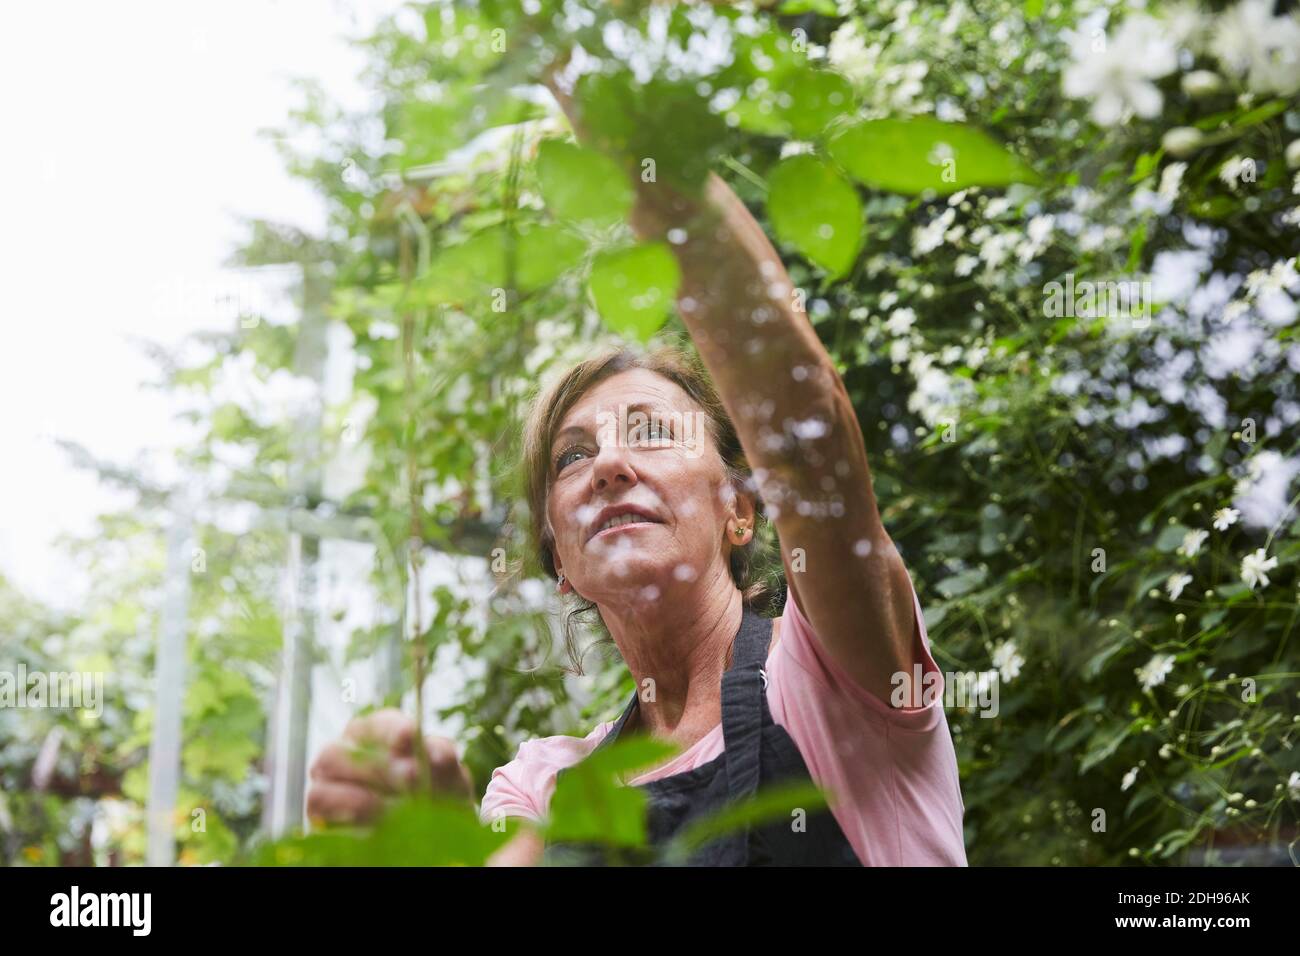 Senior female gardener analyzing plants seen through glass in yard Stock Photo